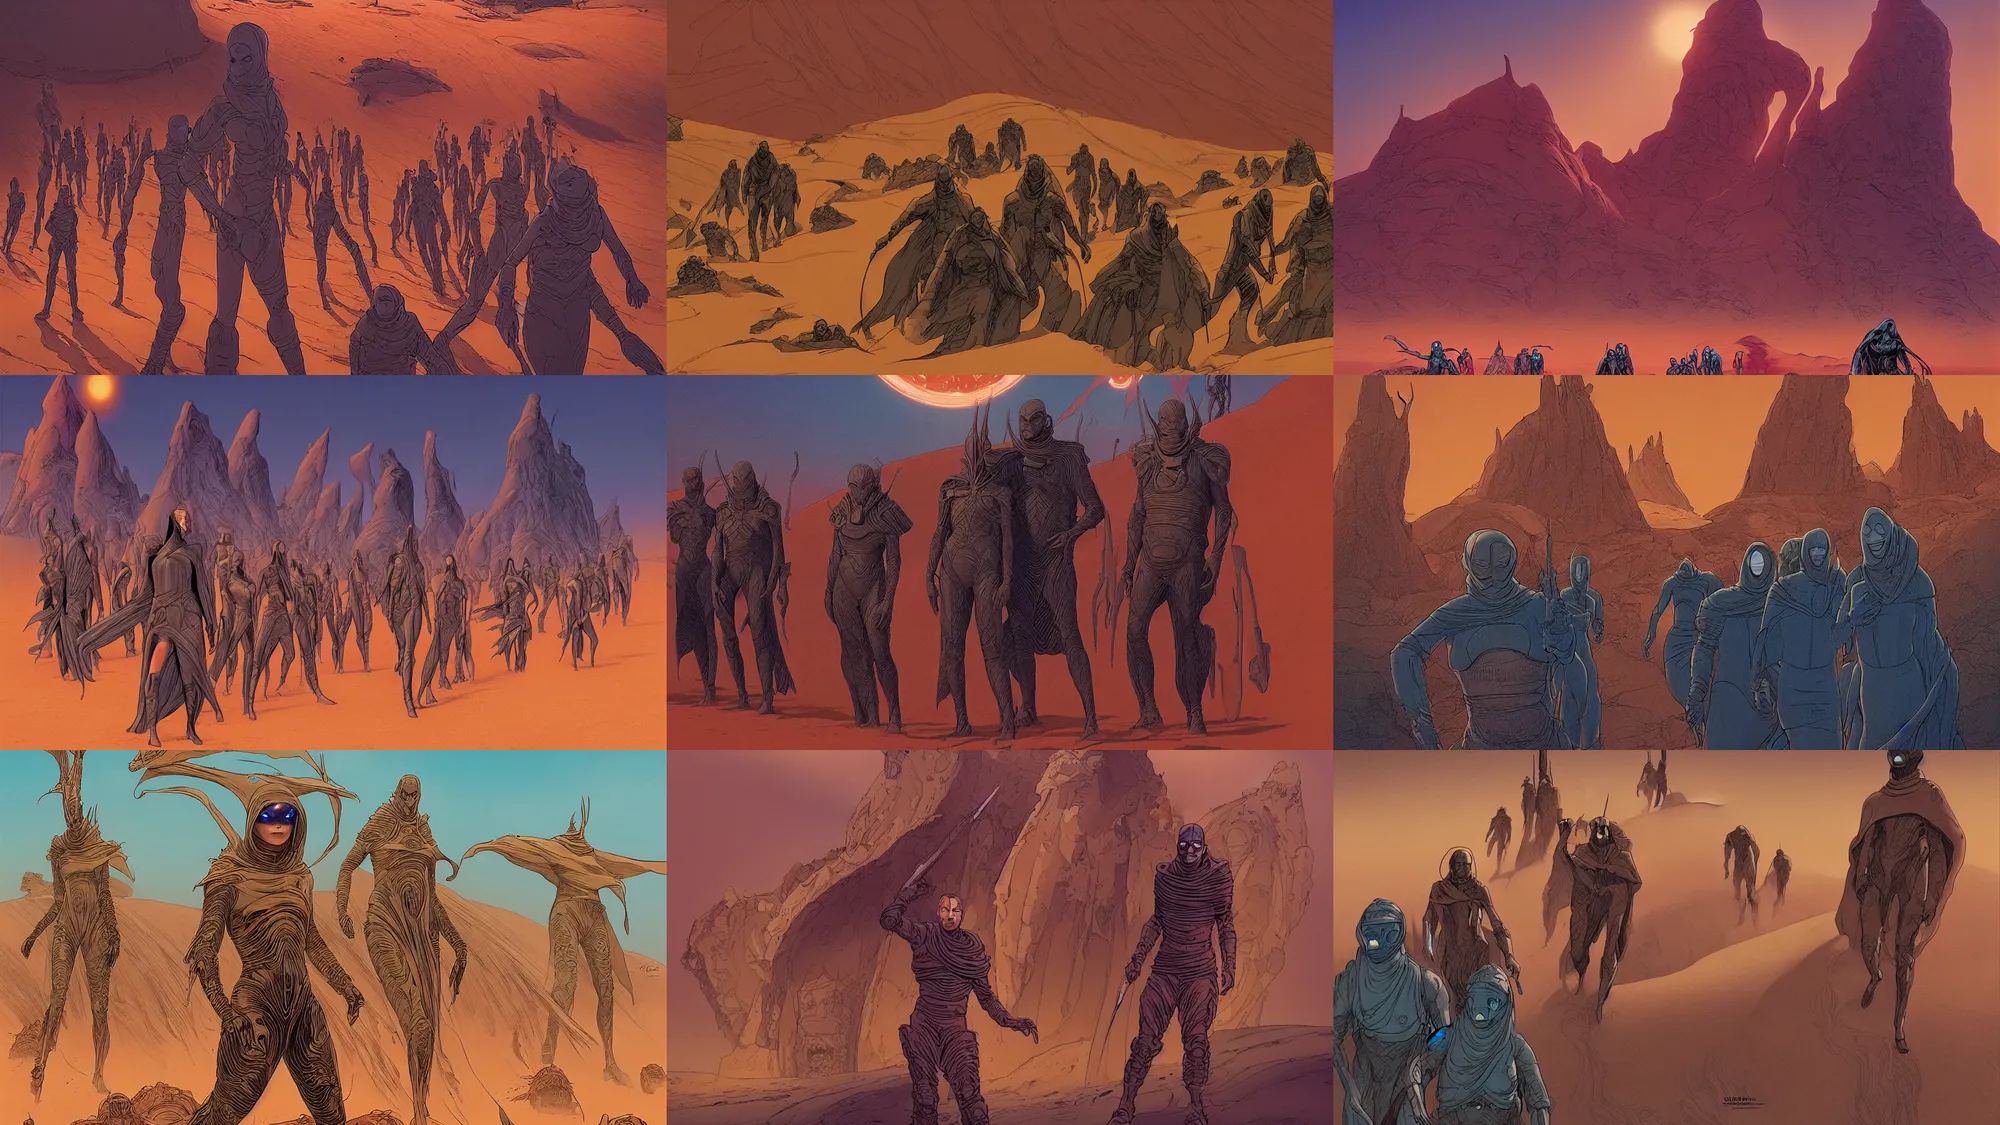 Dune (Widescreen)